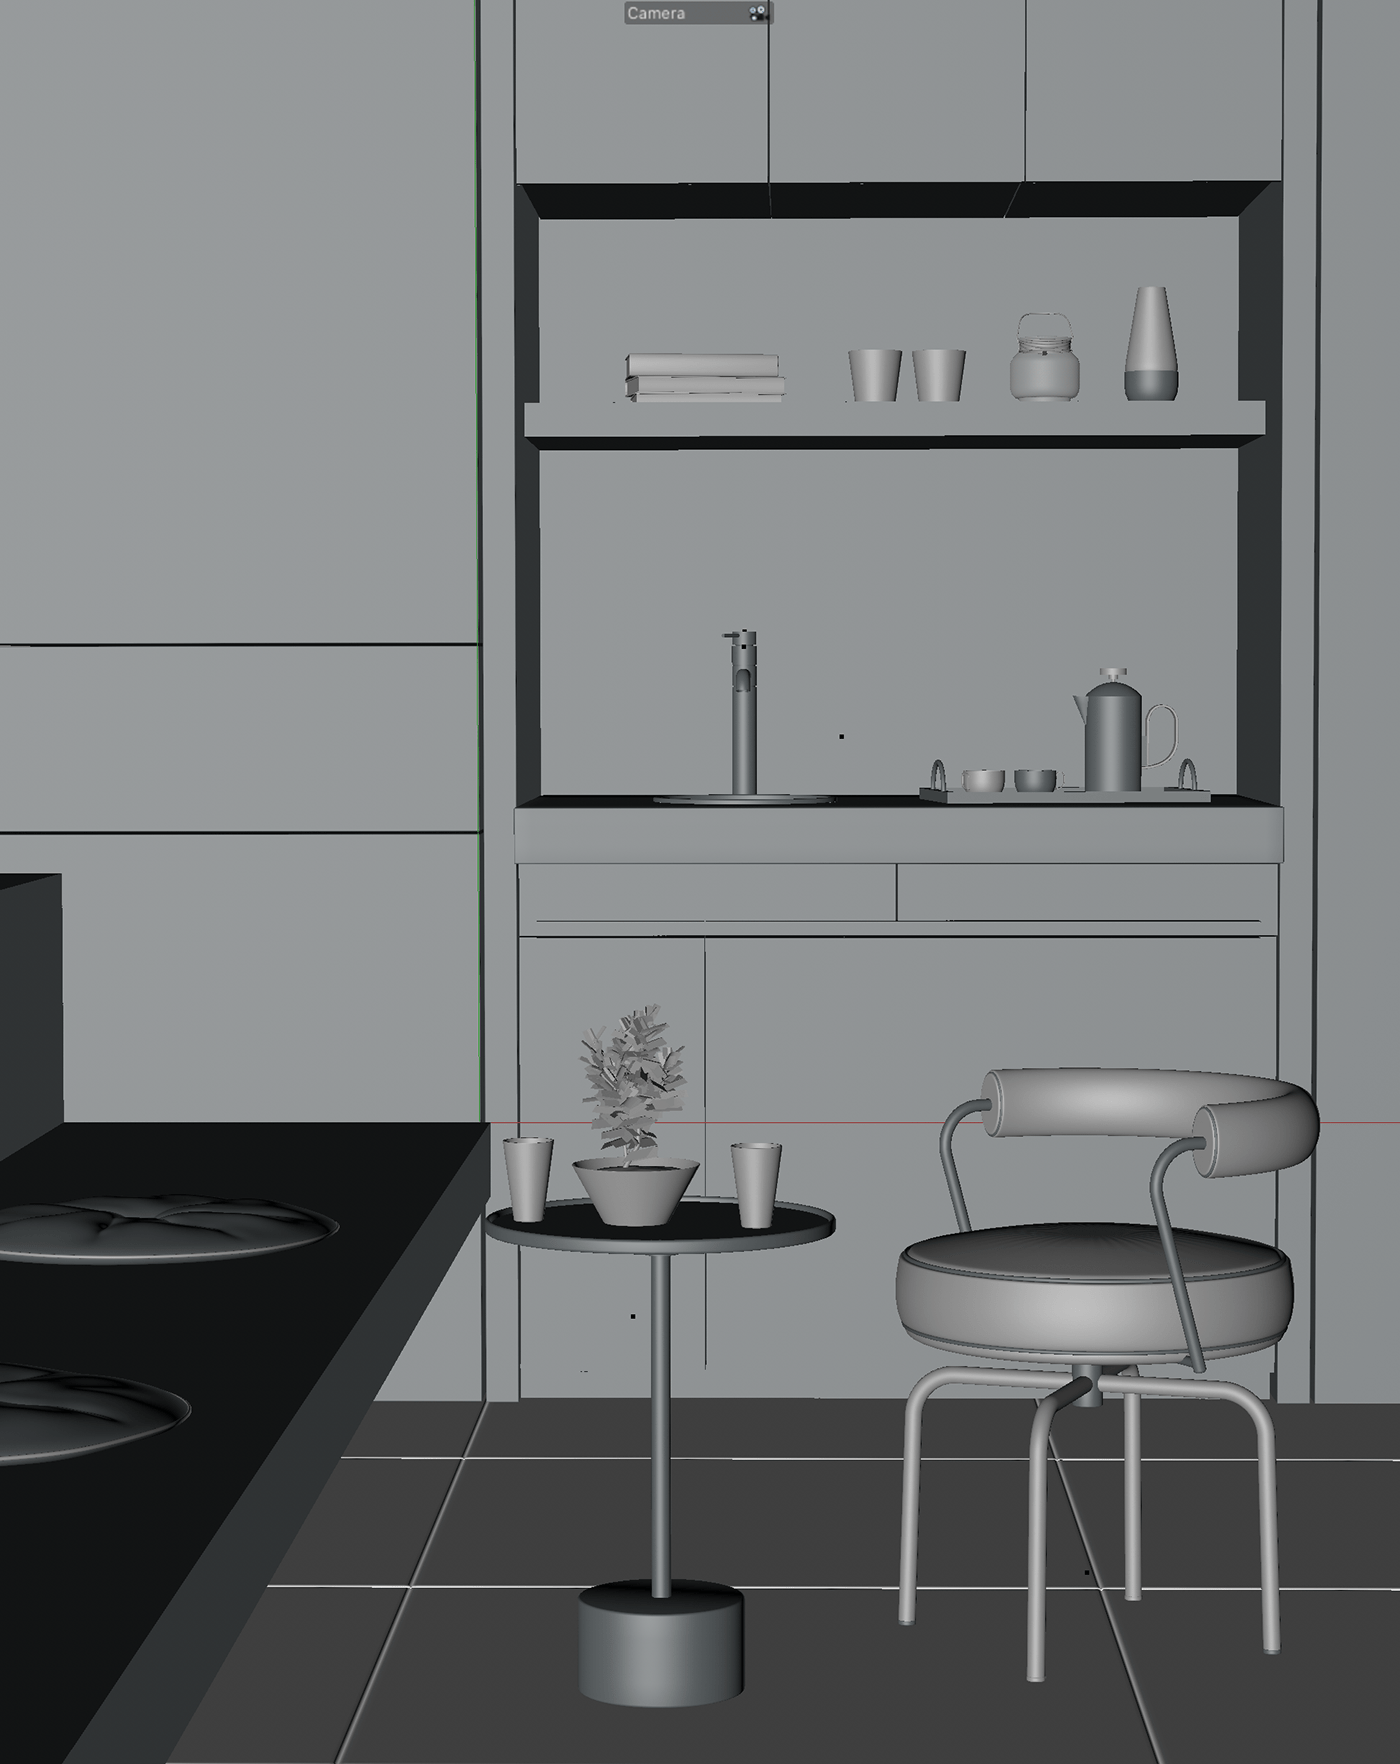 3D 3dkitchen 3droom 3dvisualization clayrender cleanstyle Interior Modernart photorealism